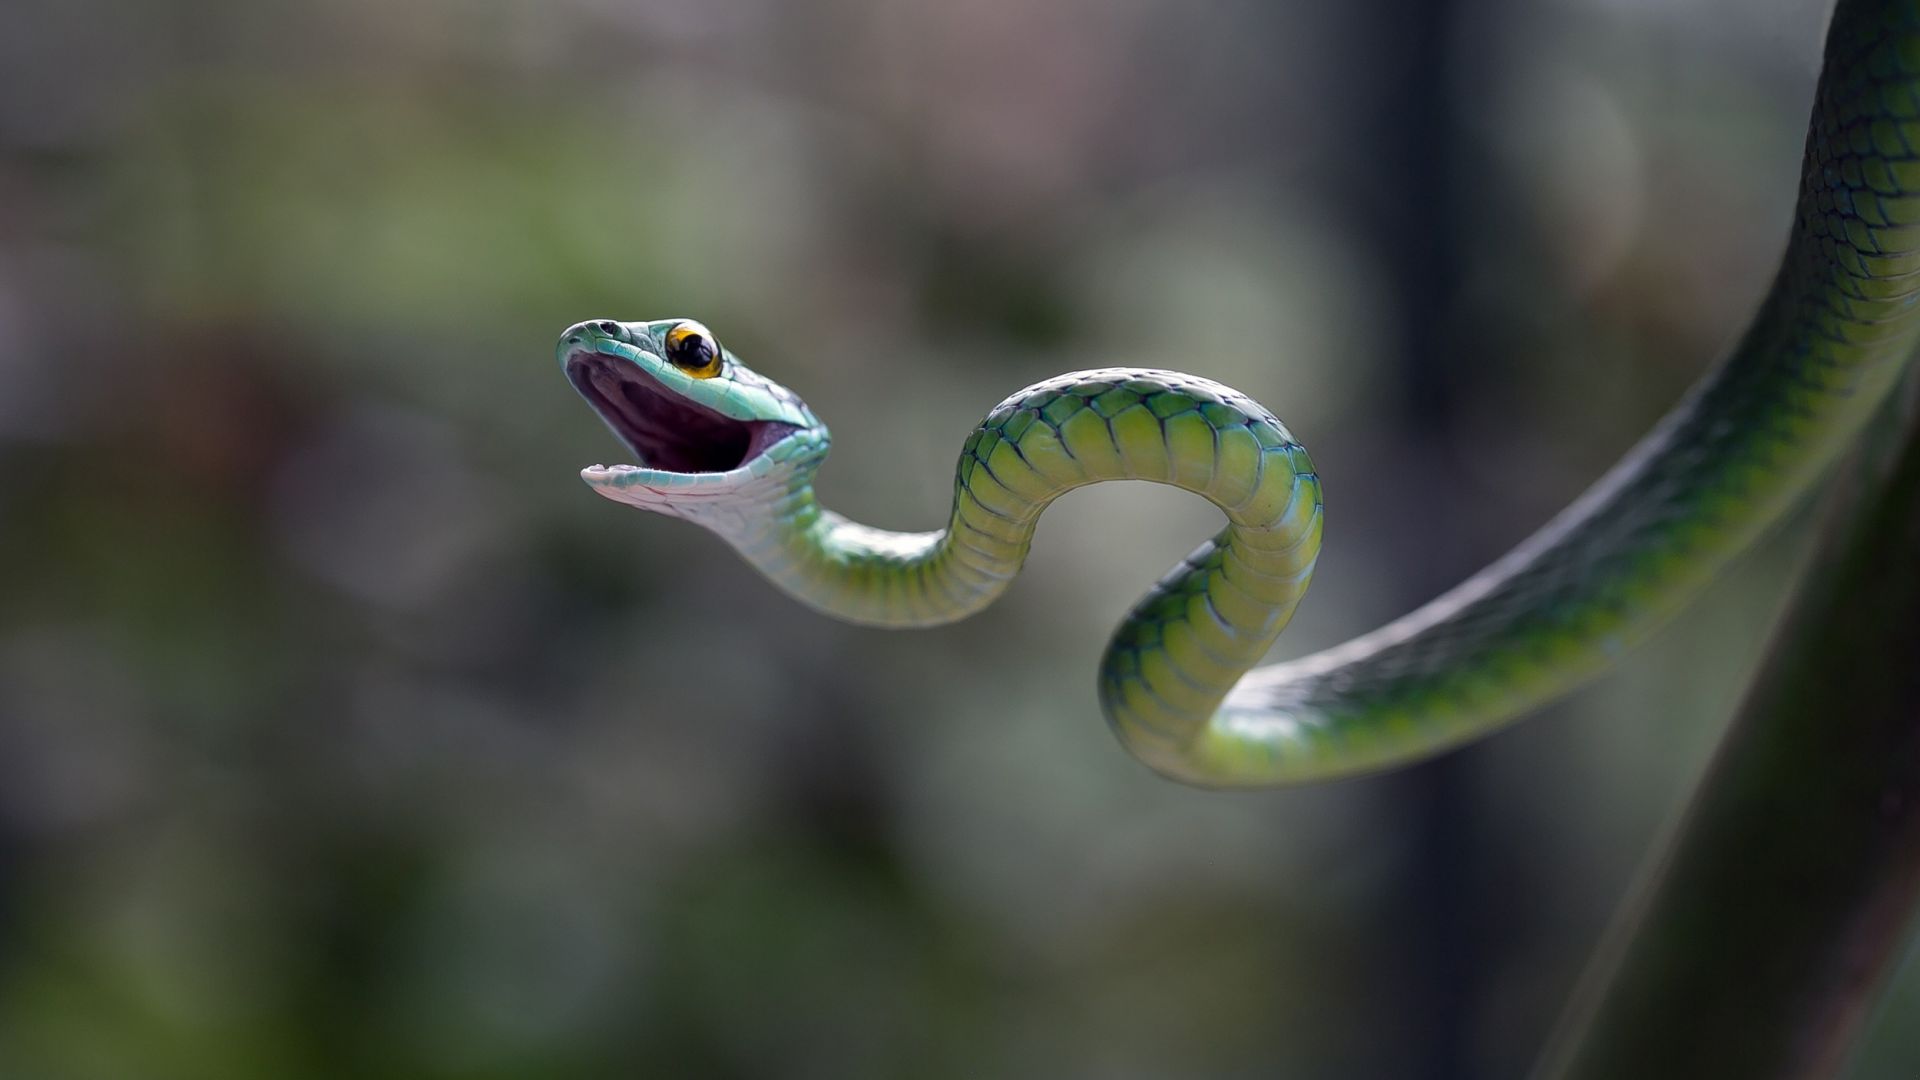 Узкоголовая мамба, змея, макро, размытость, Eastern green mamba, snake, macro, blur (horizontal)